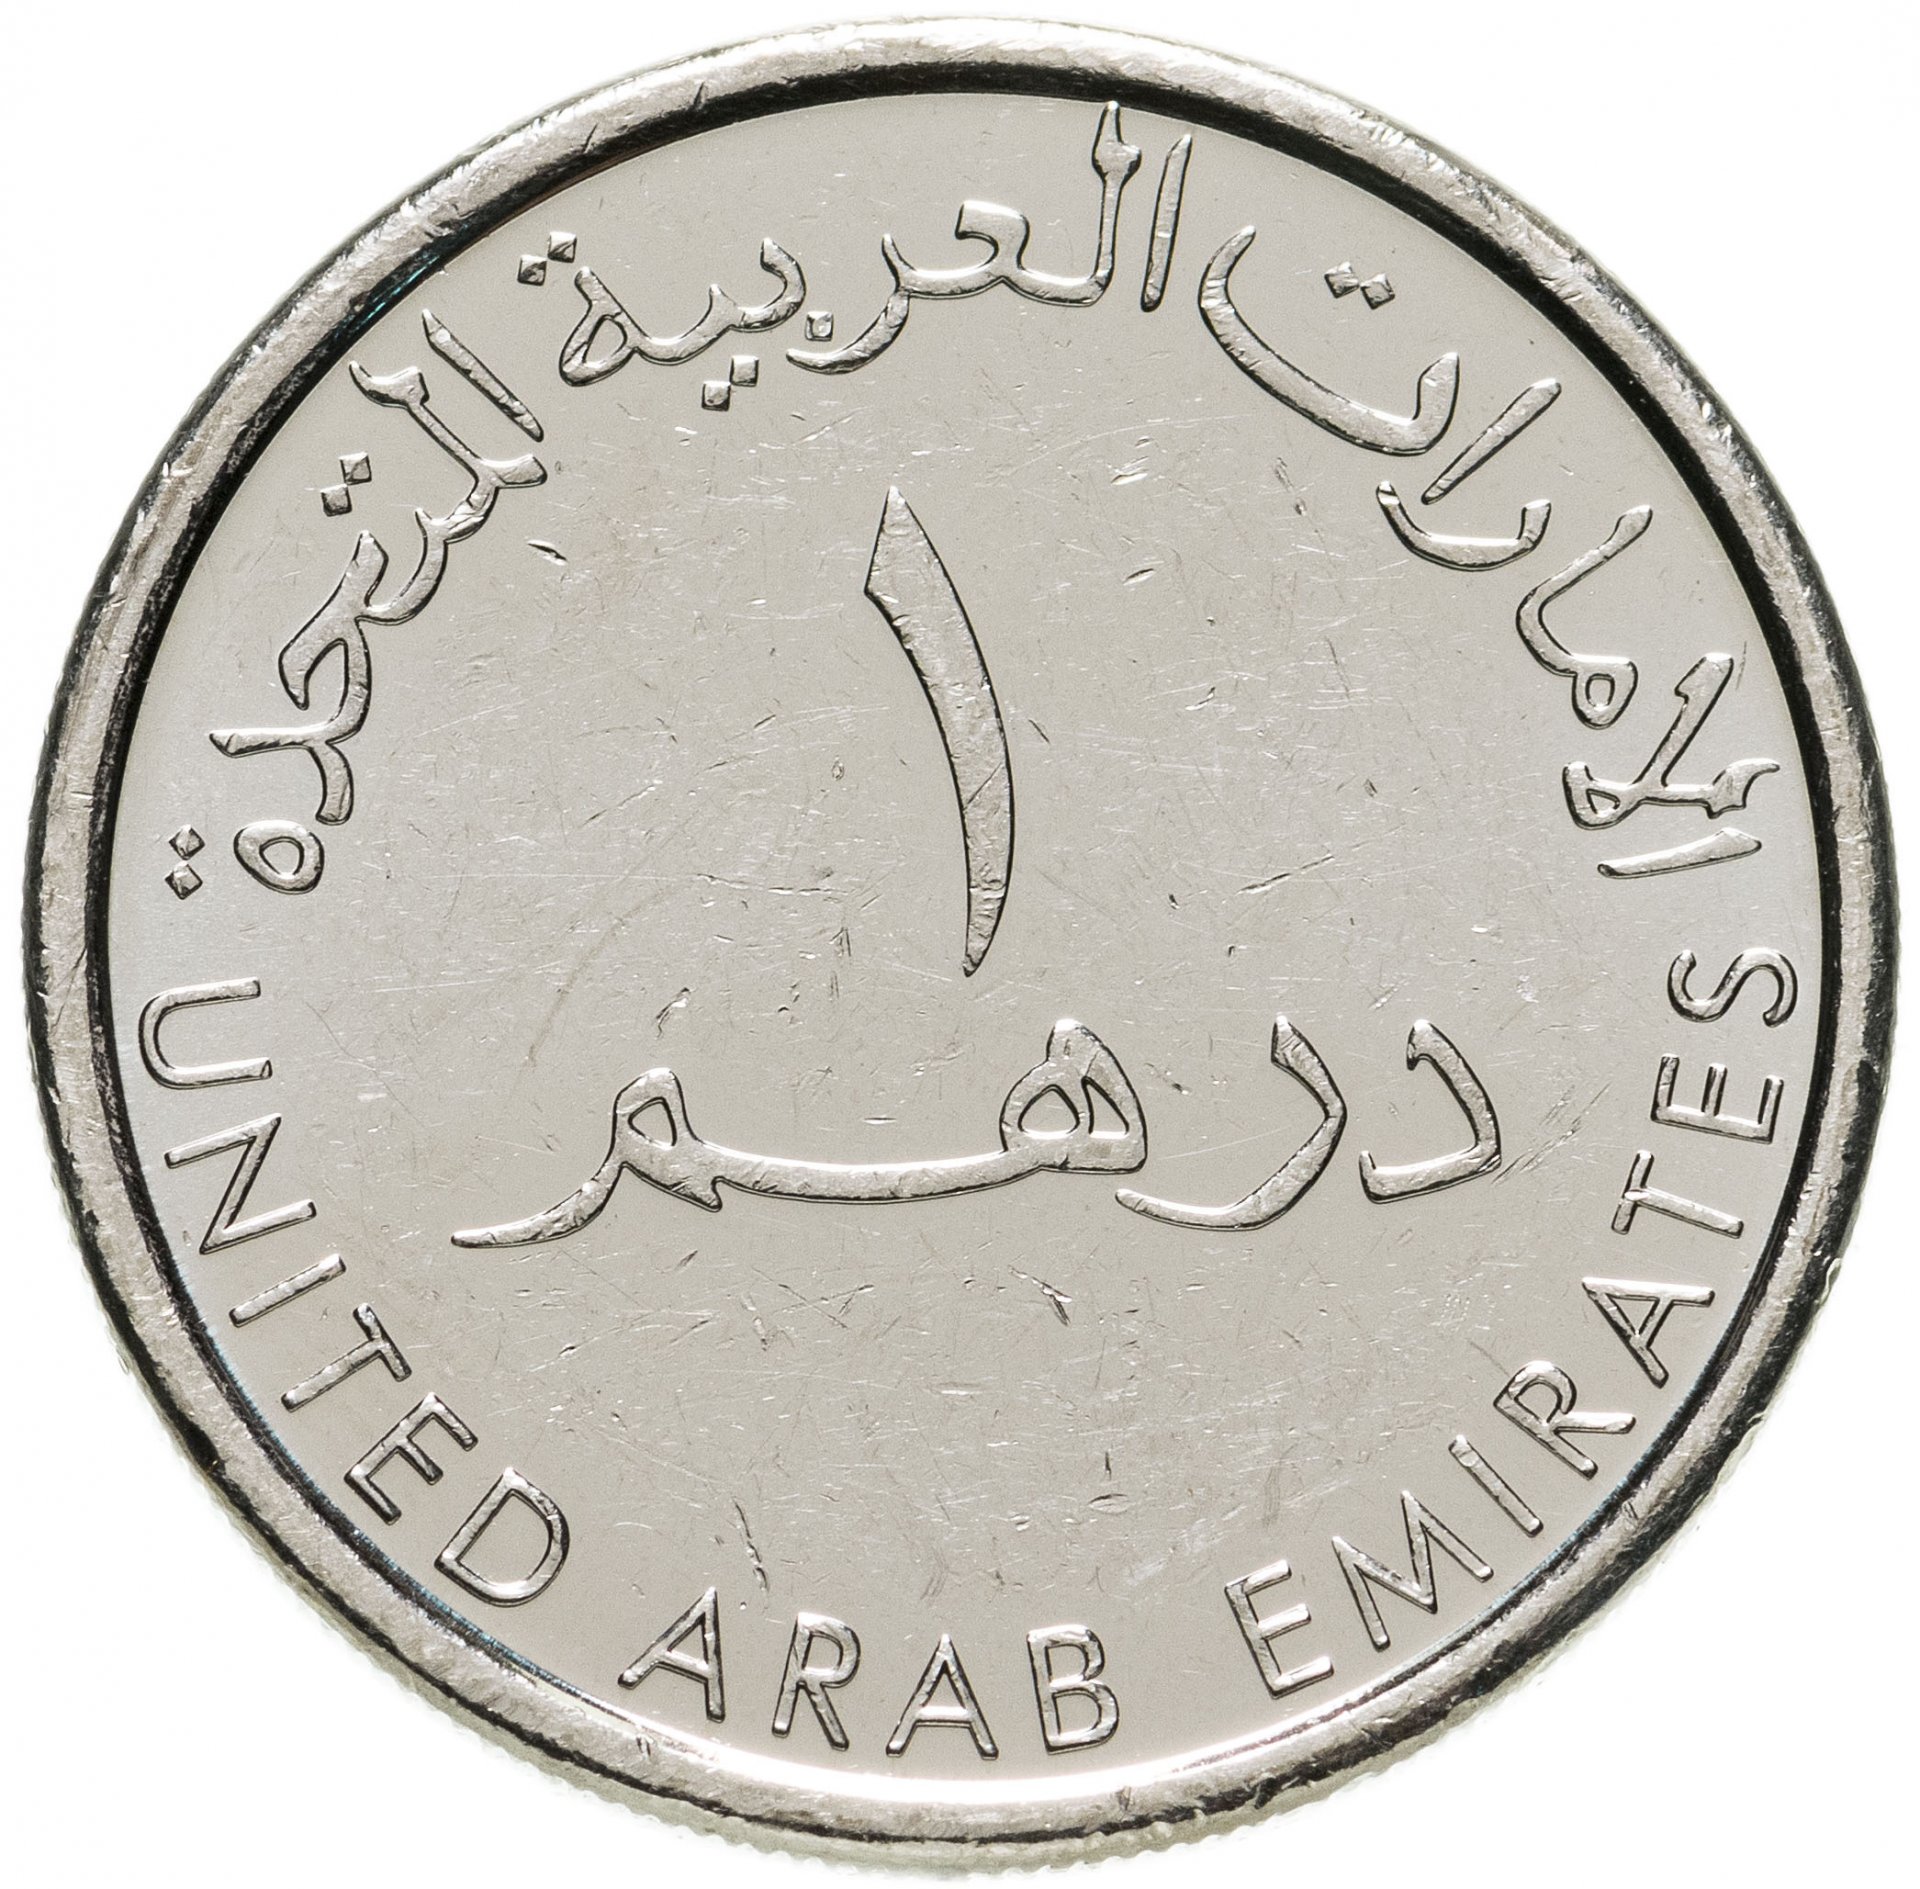 160 миллионов дирхам. United arab Emirates монета. Дирхам ОАЭ. Монеты Эмиратов 1 дирхам. Монеты эмираты 1 дирхам 1995.